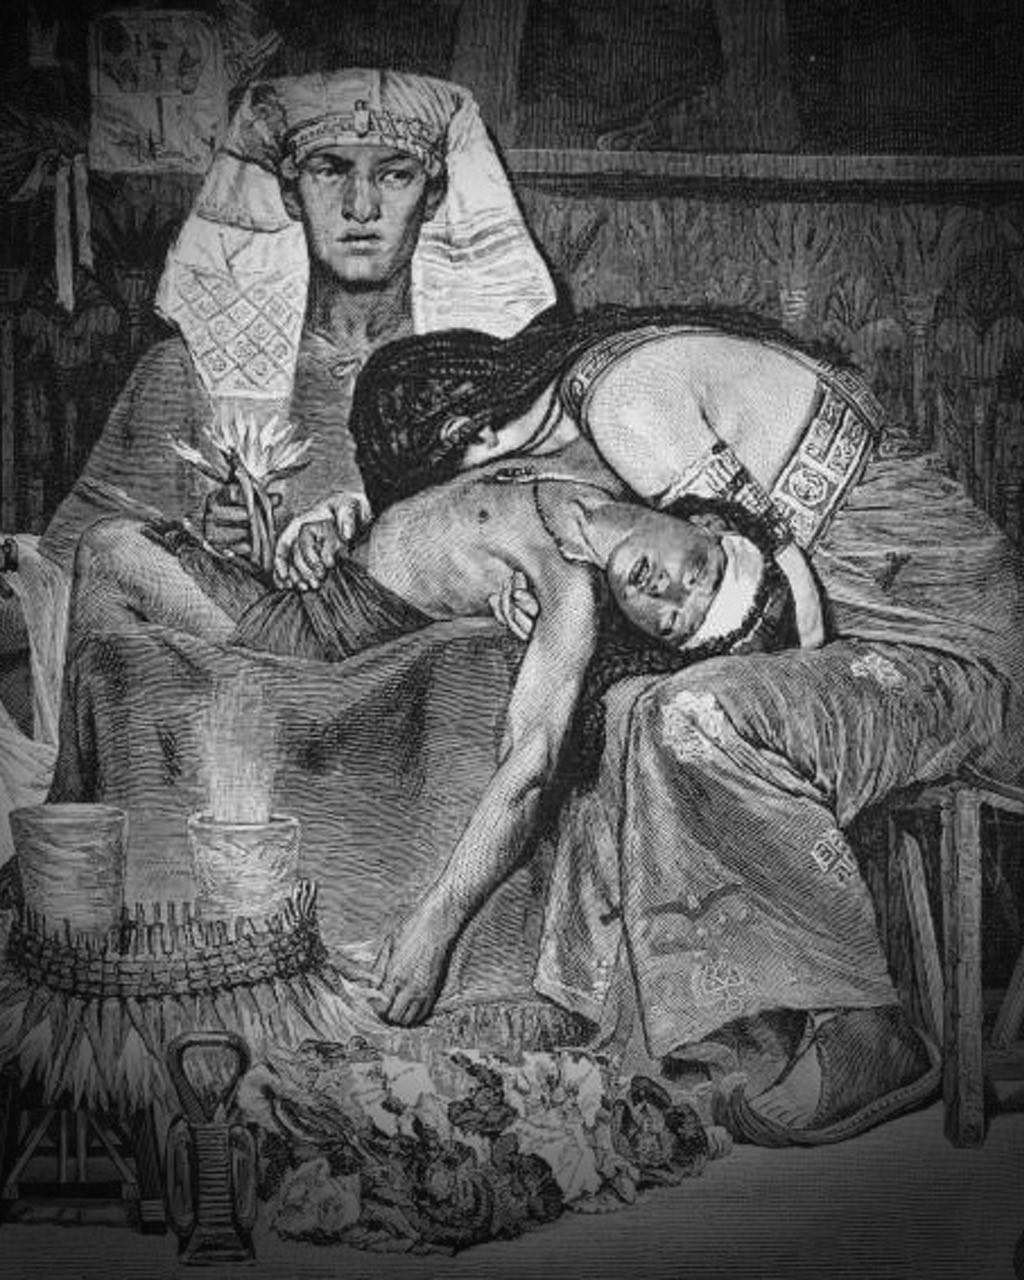 Der Pharao trauert um seinen toten Sohn